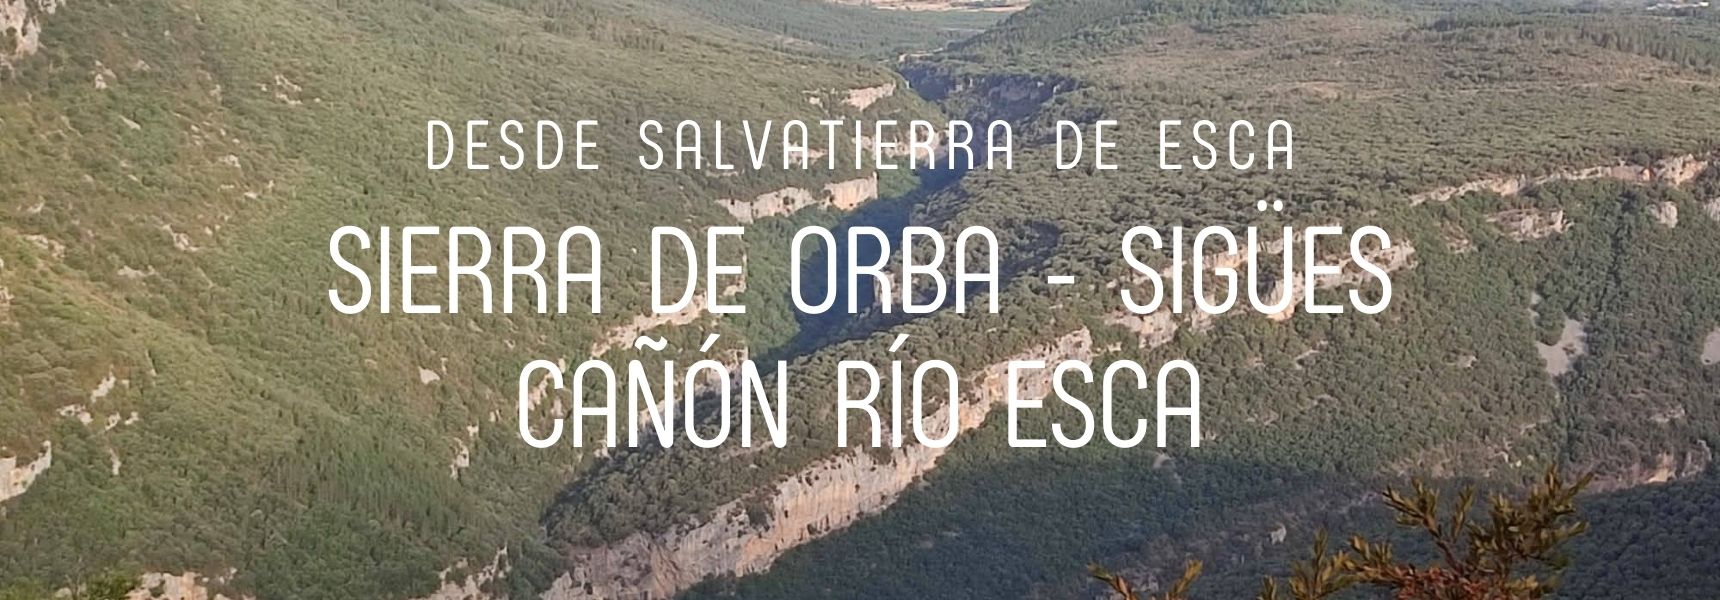 Sierra de Orba – Sigües – Cañón río Esca